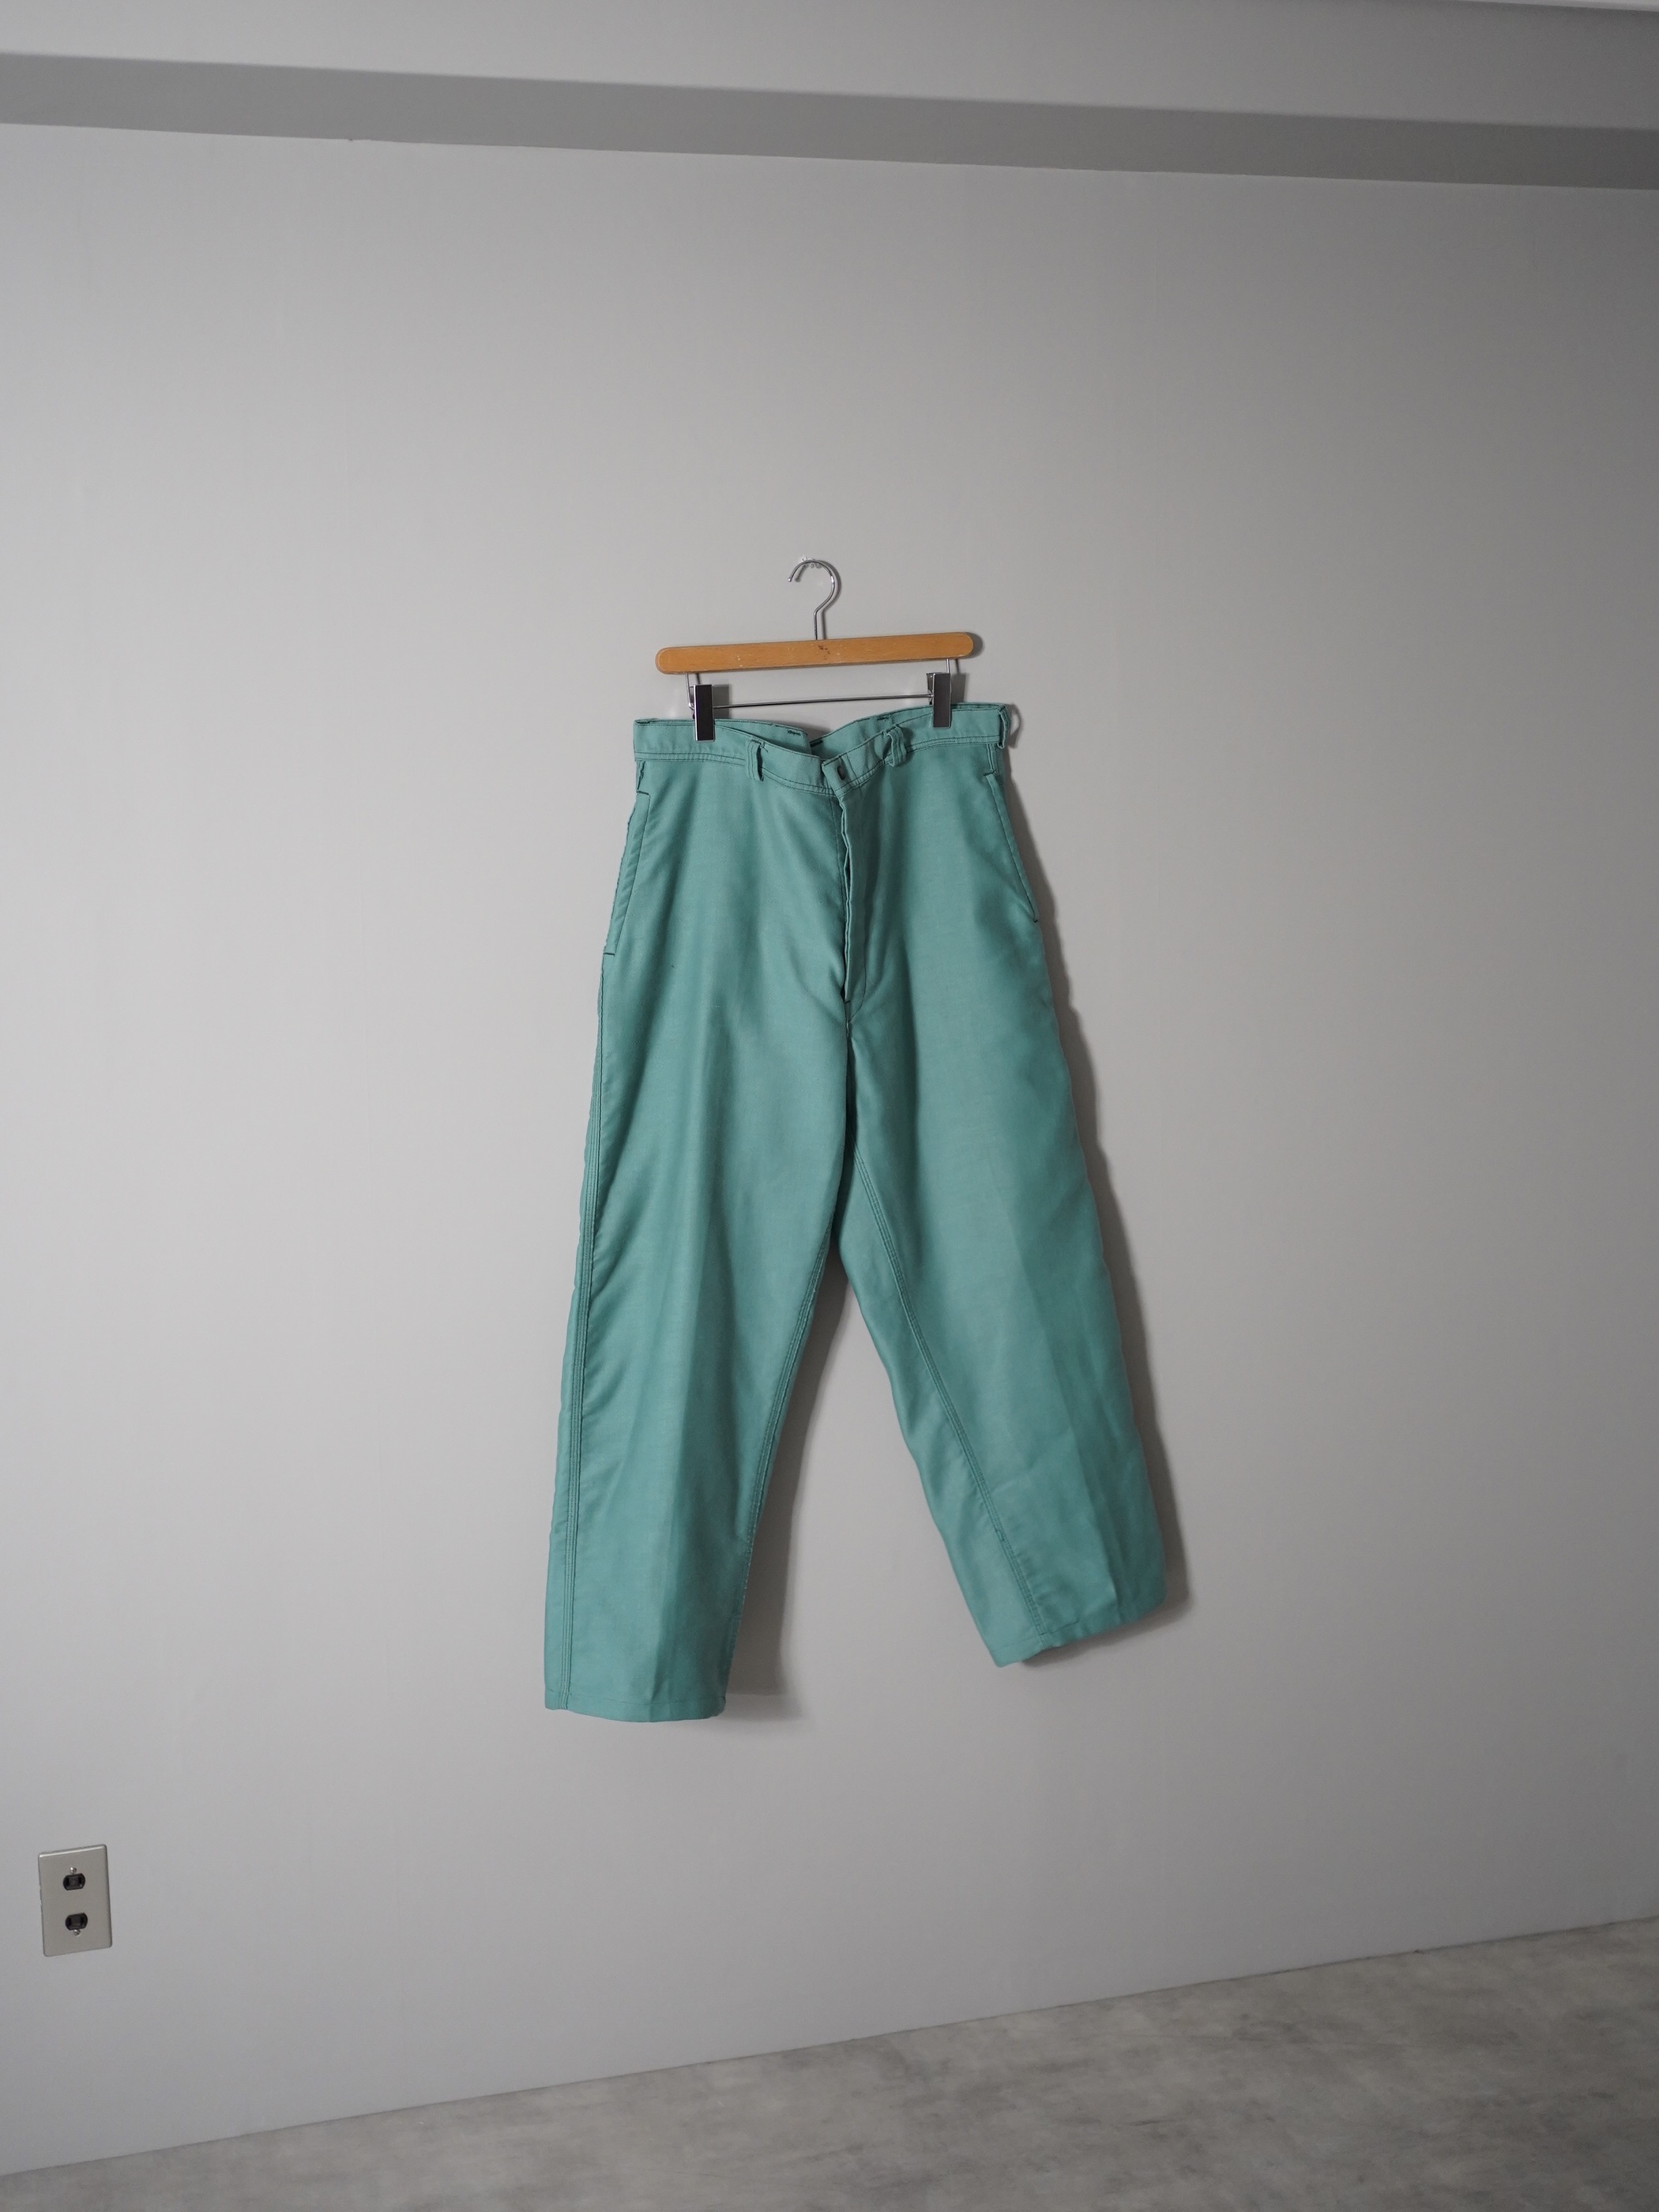 Vintage Wide welding pants